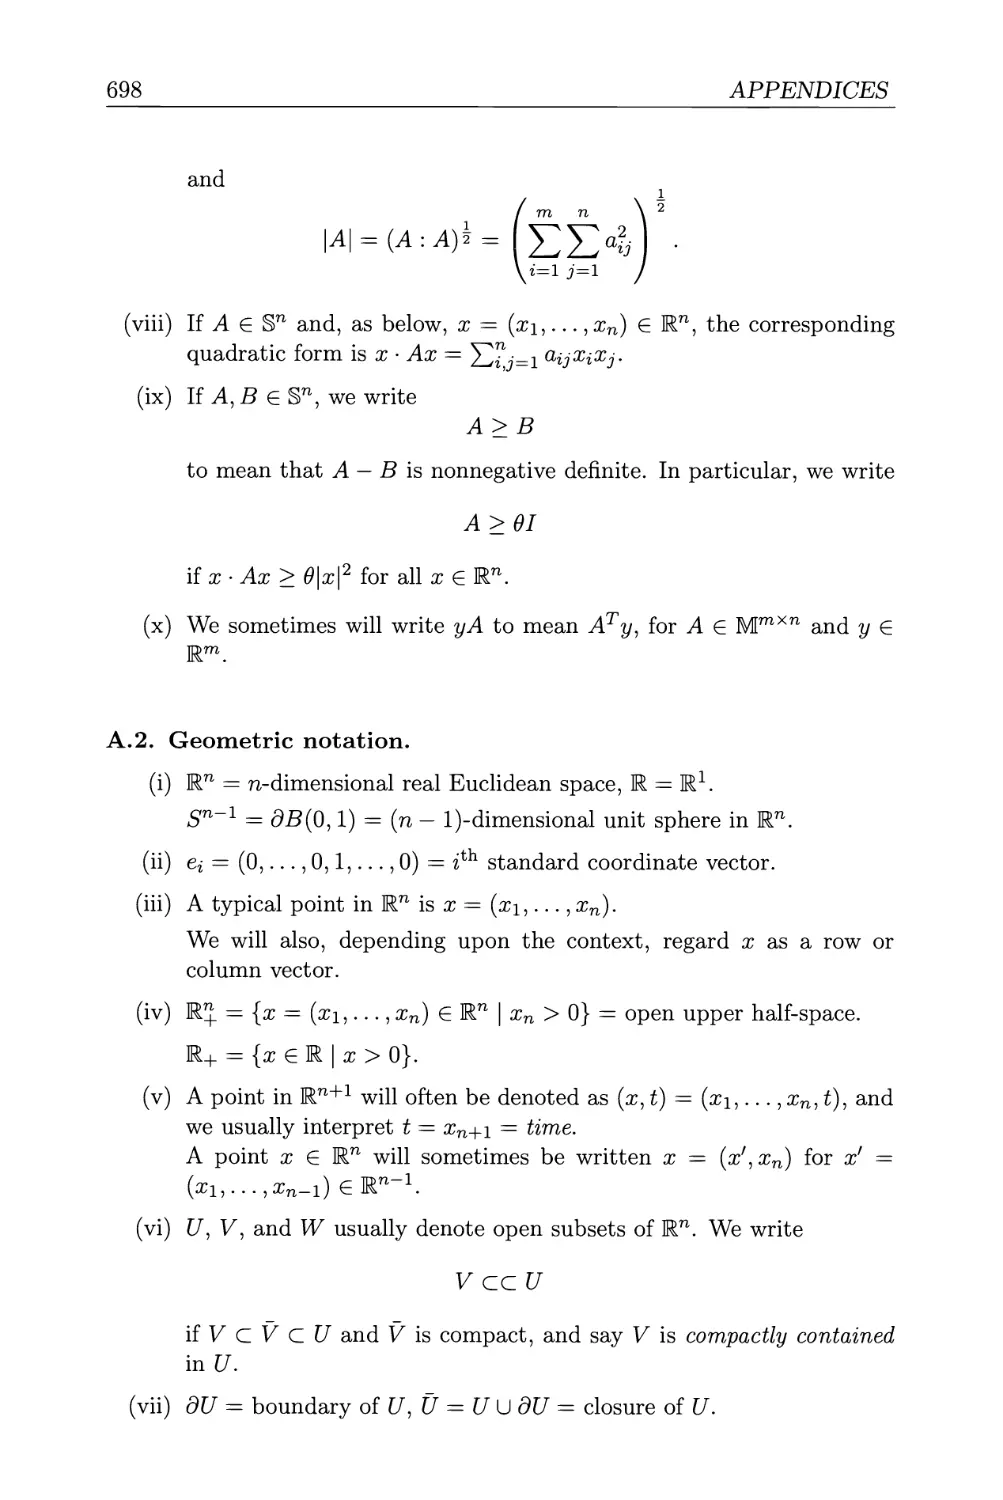 A.2. Geometric notation